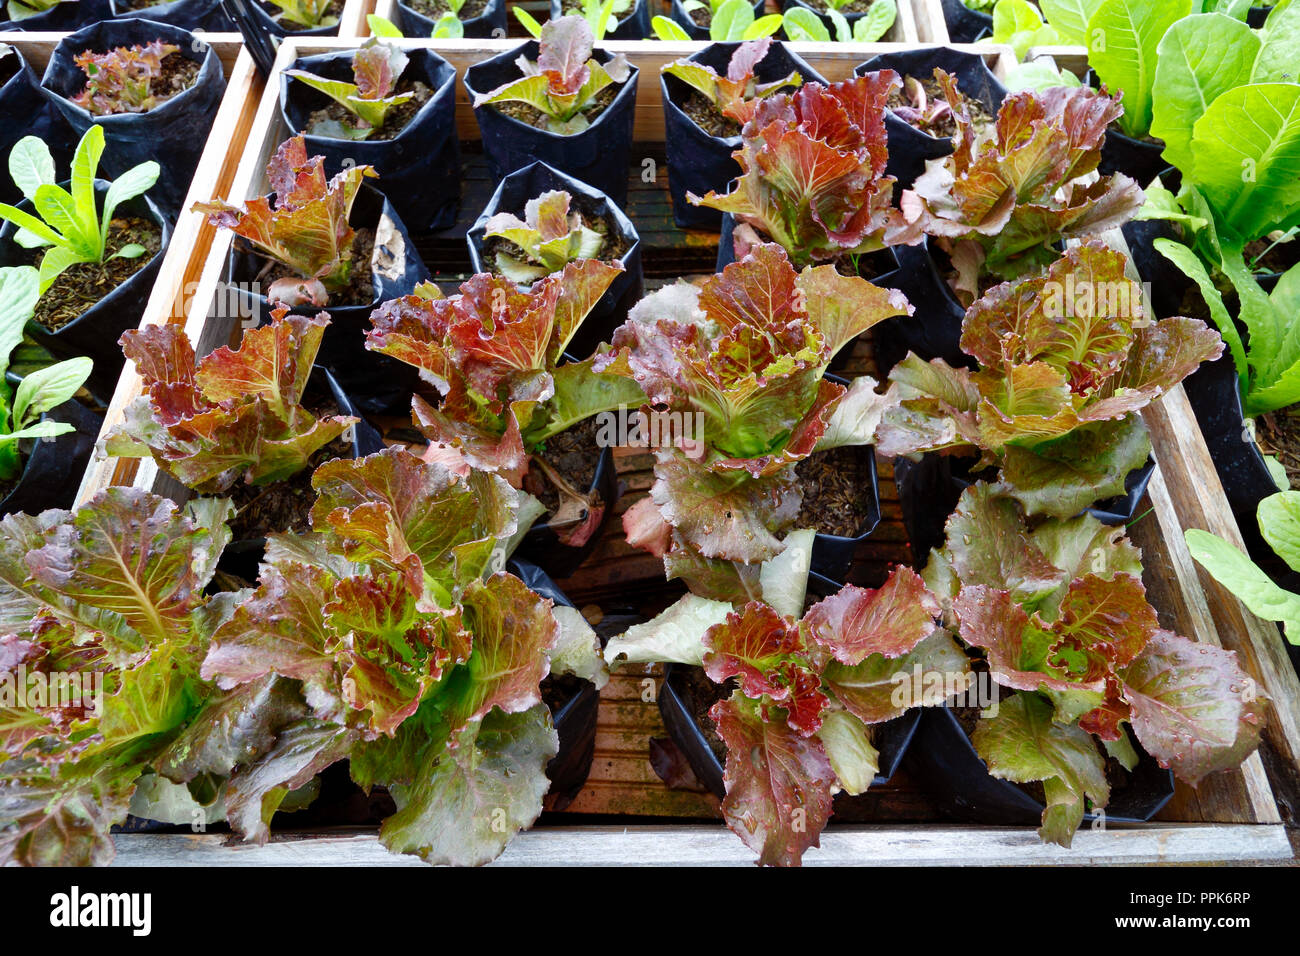 Organic vegetables glowing on raise kitchen garden bed Stock Photo